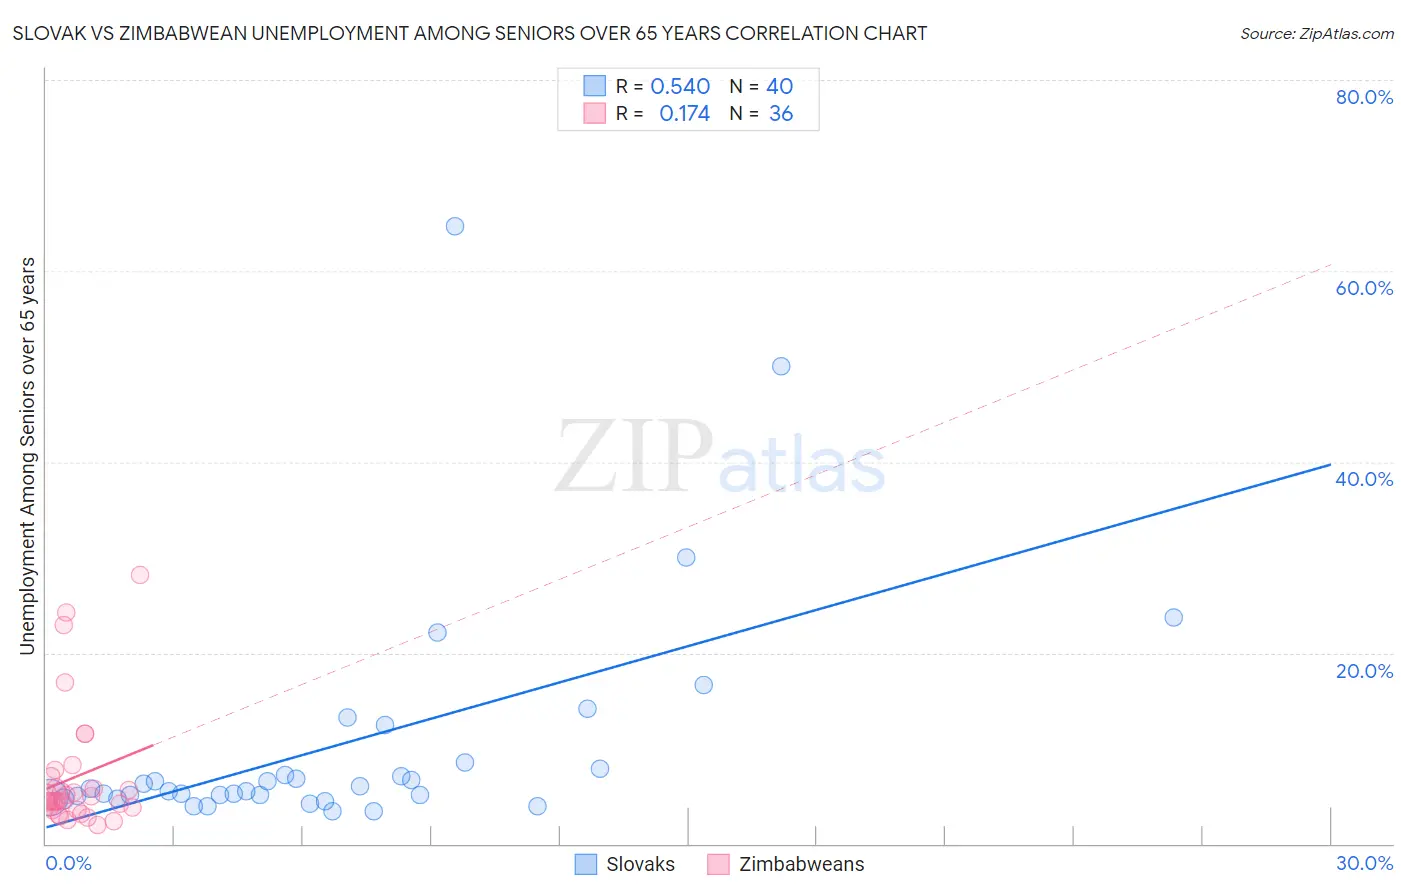 Slovak vs Zimbabwean Unemployment Among Seniors over 65 years